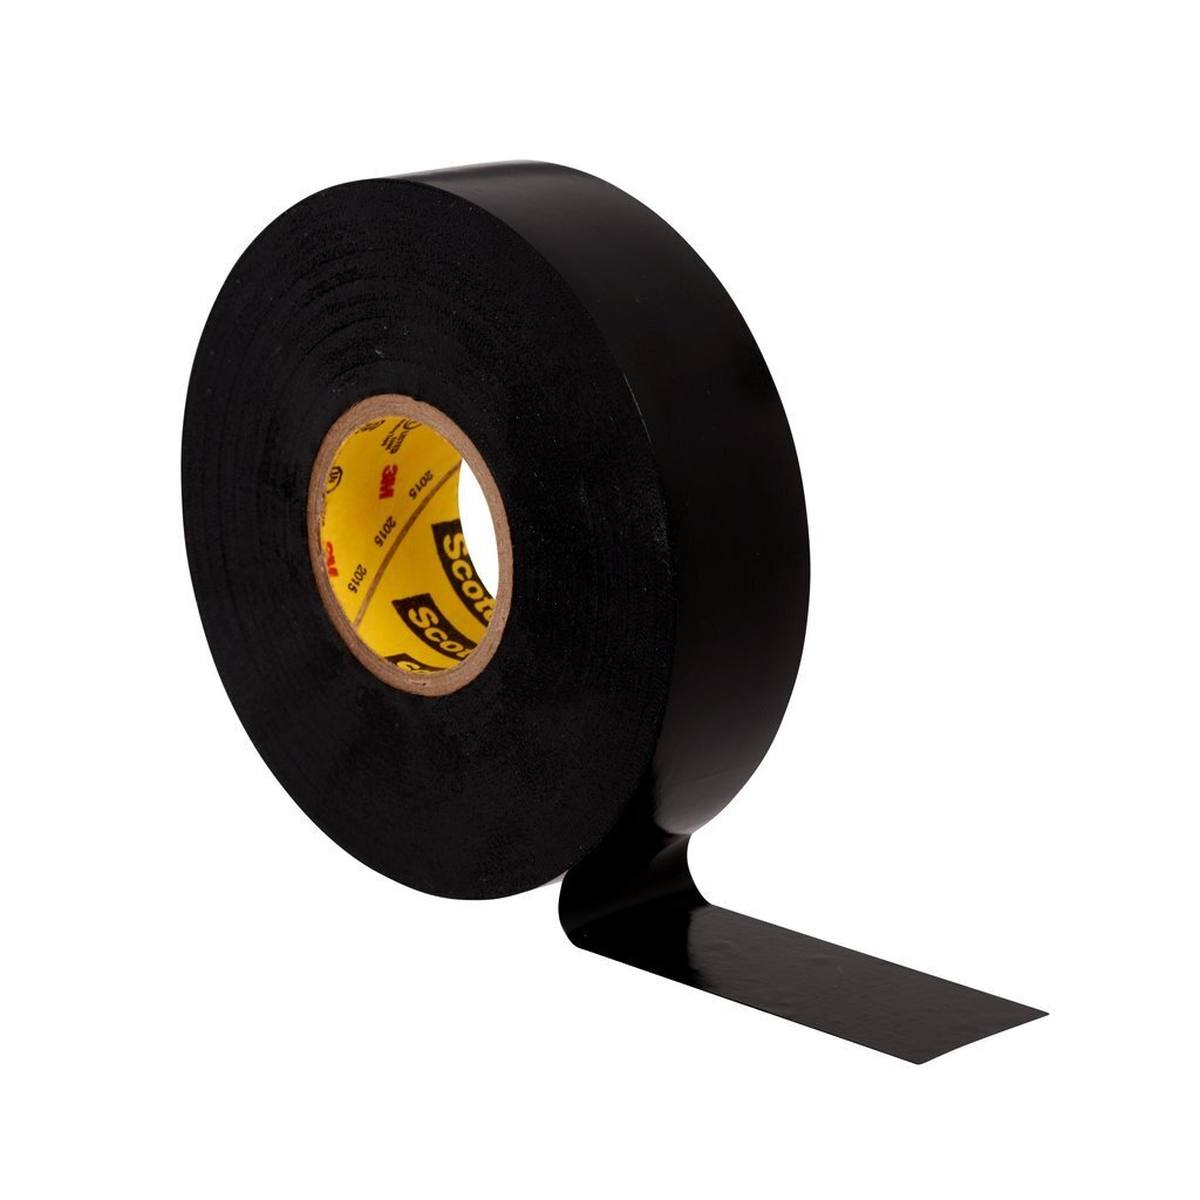 3M Scotch Super 33+ vinyl isolatietape, zwart, 50 mm x 33 m, 0,18 mm